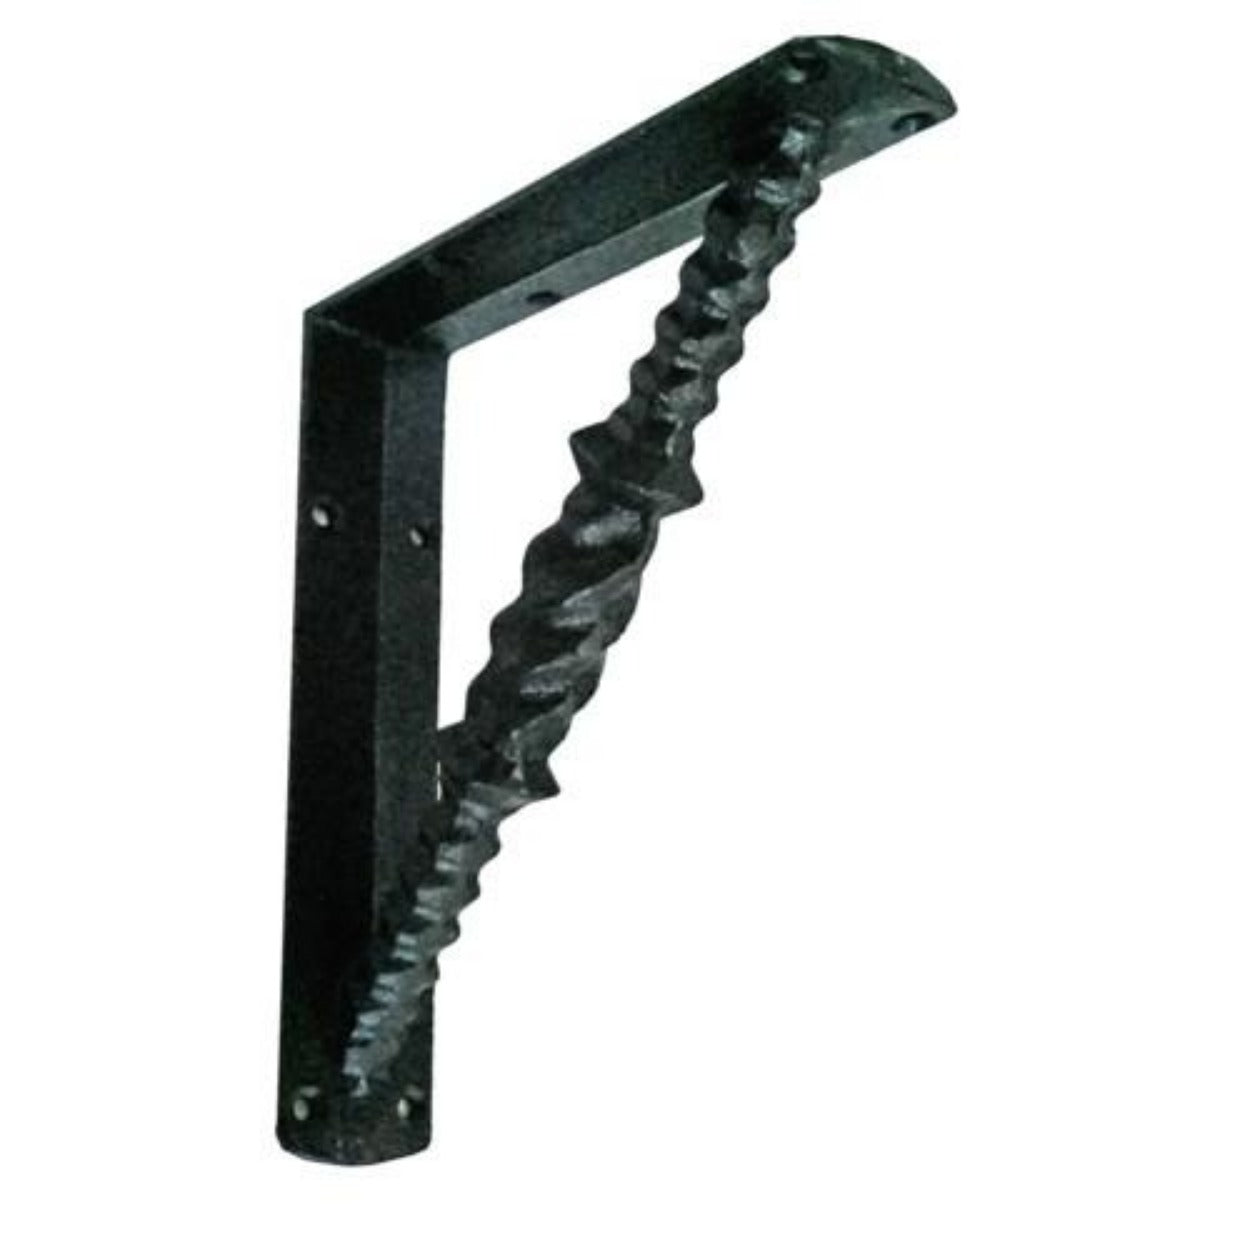 RCH Hardware 7902BLK Fancy Decorative Cast Iron Shelf Bracket Matching Screws Included Black